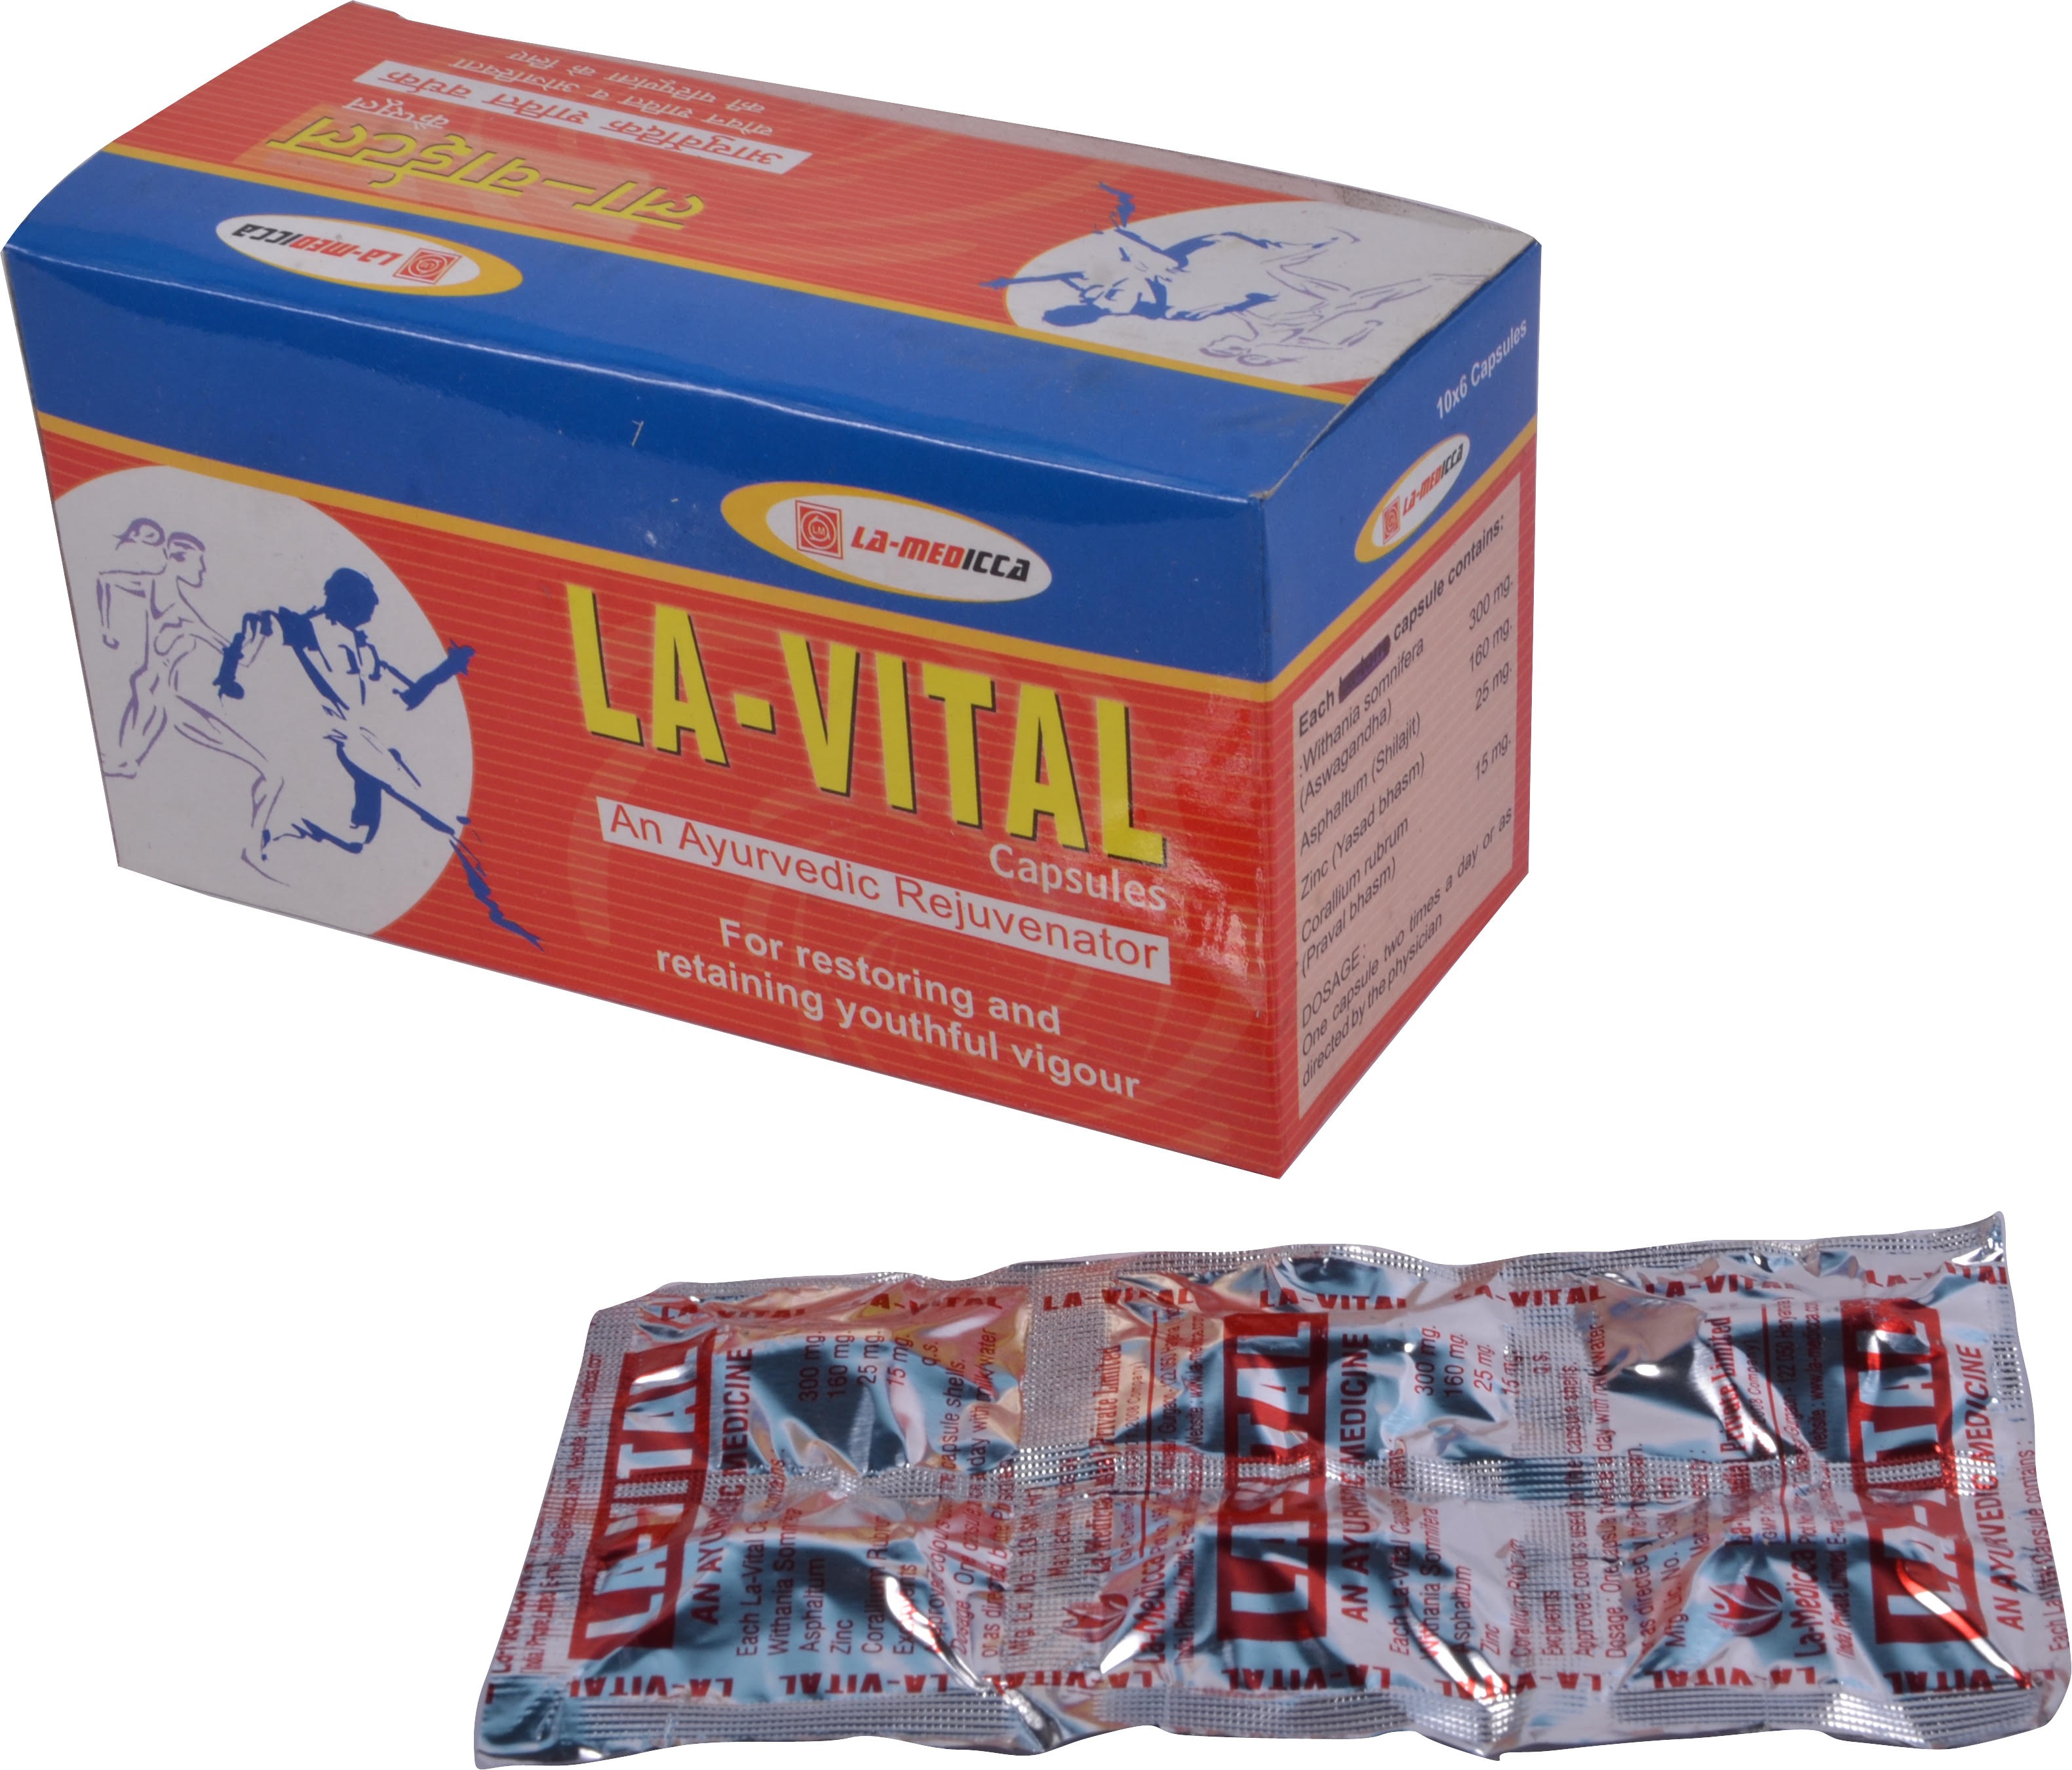 Buy La-Vital Capsules at Best Price Online